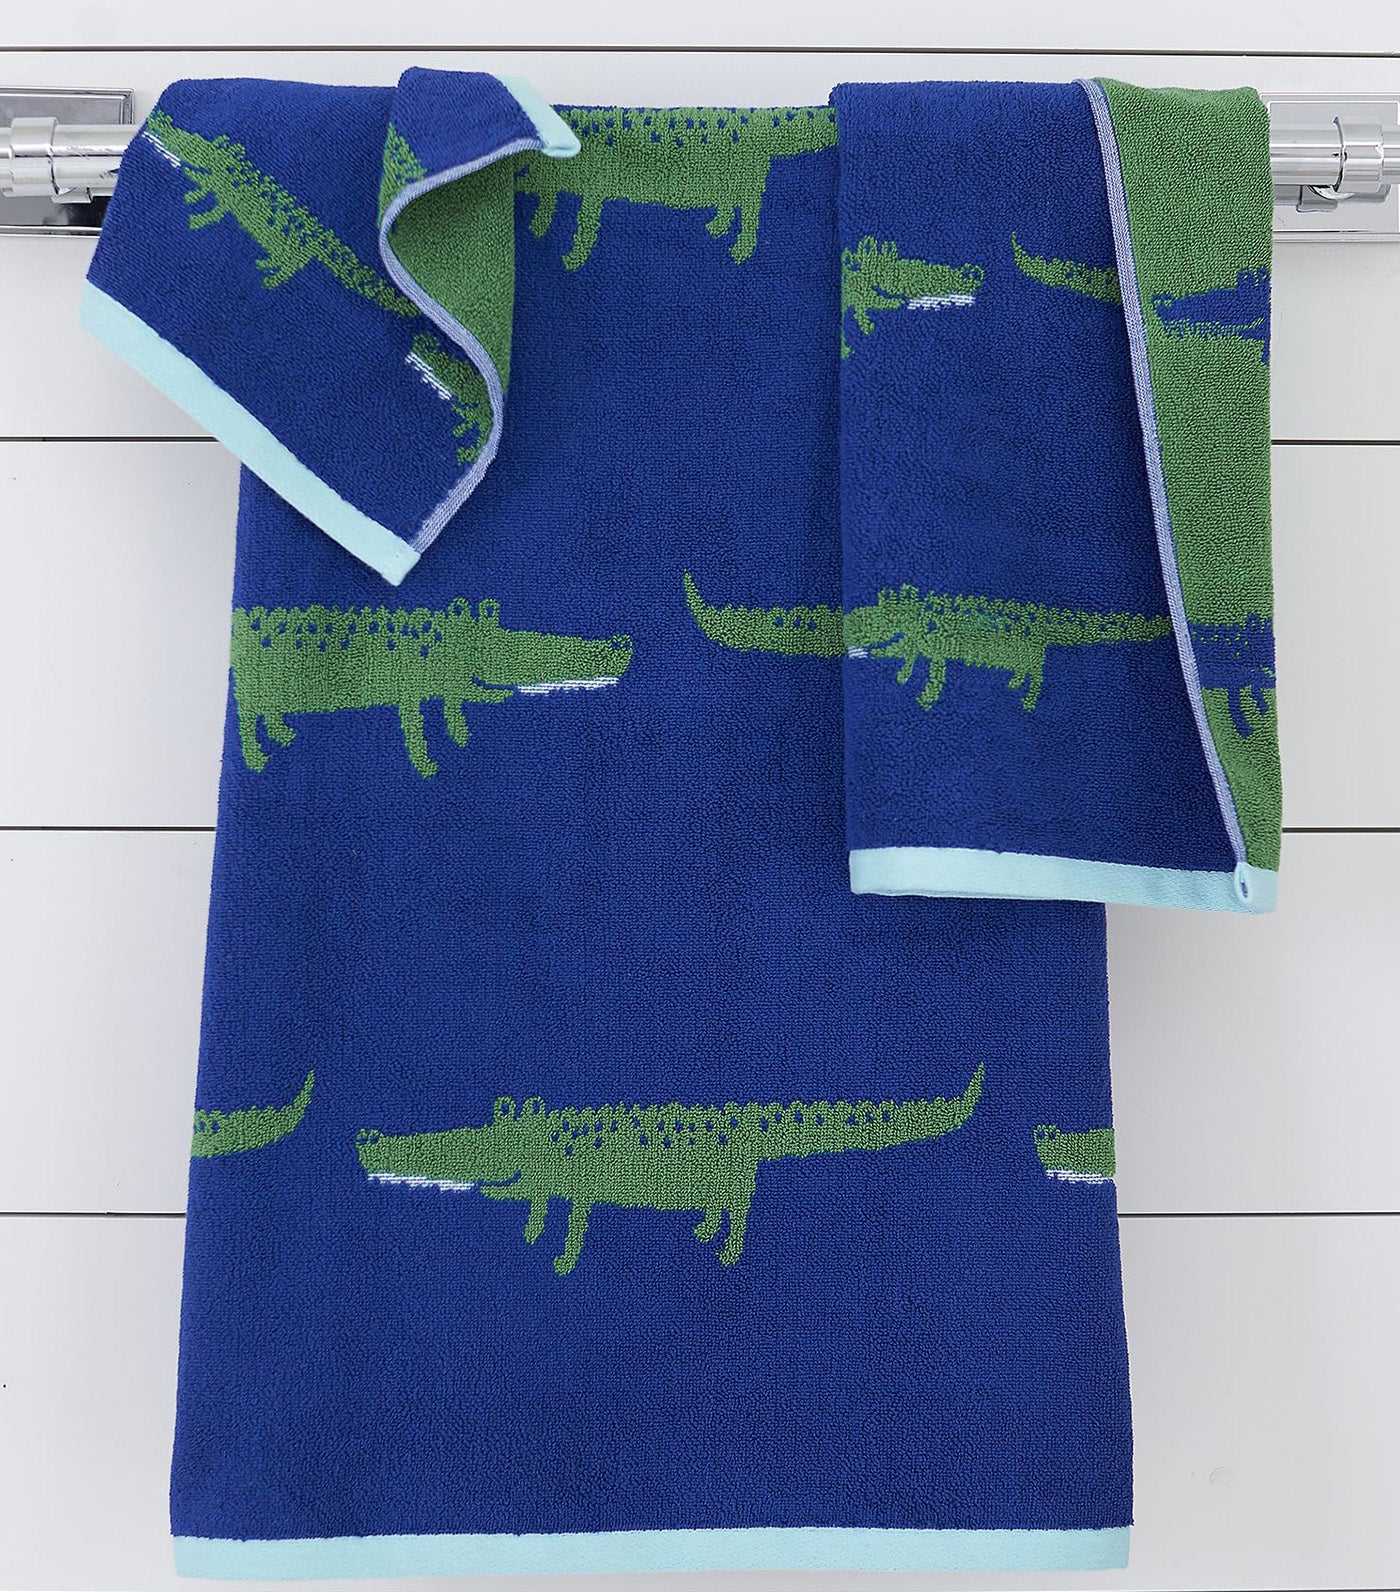 Alligator Jacquard Towel Collection Hand Towel